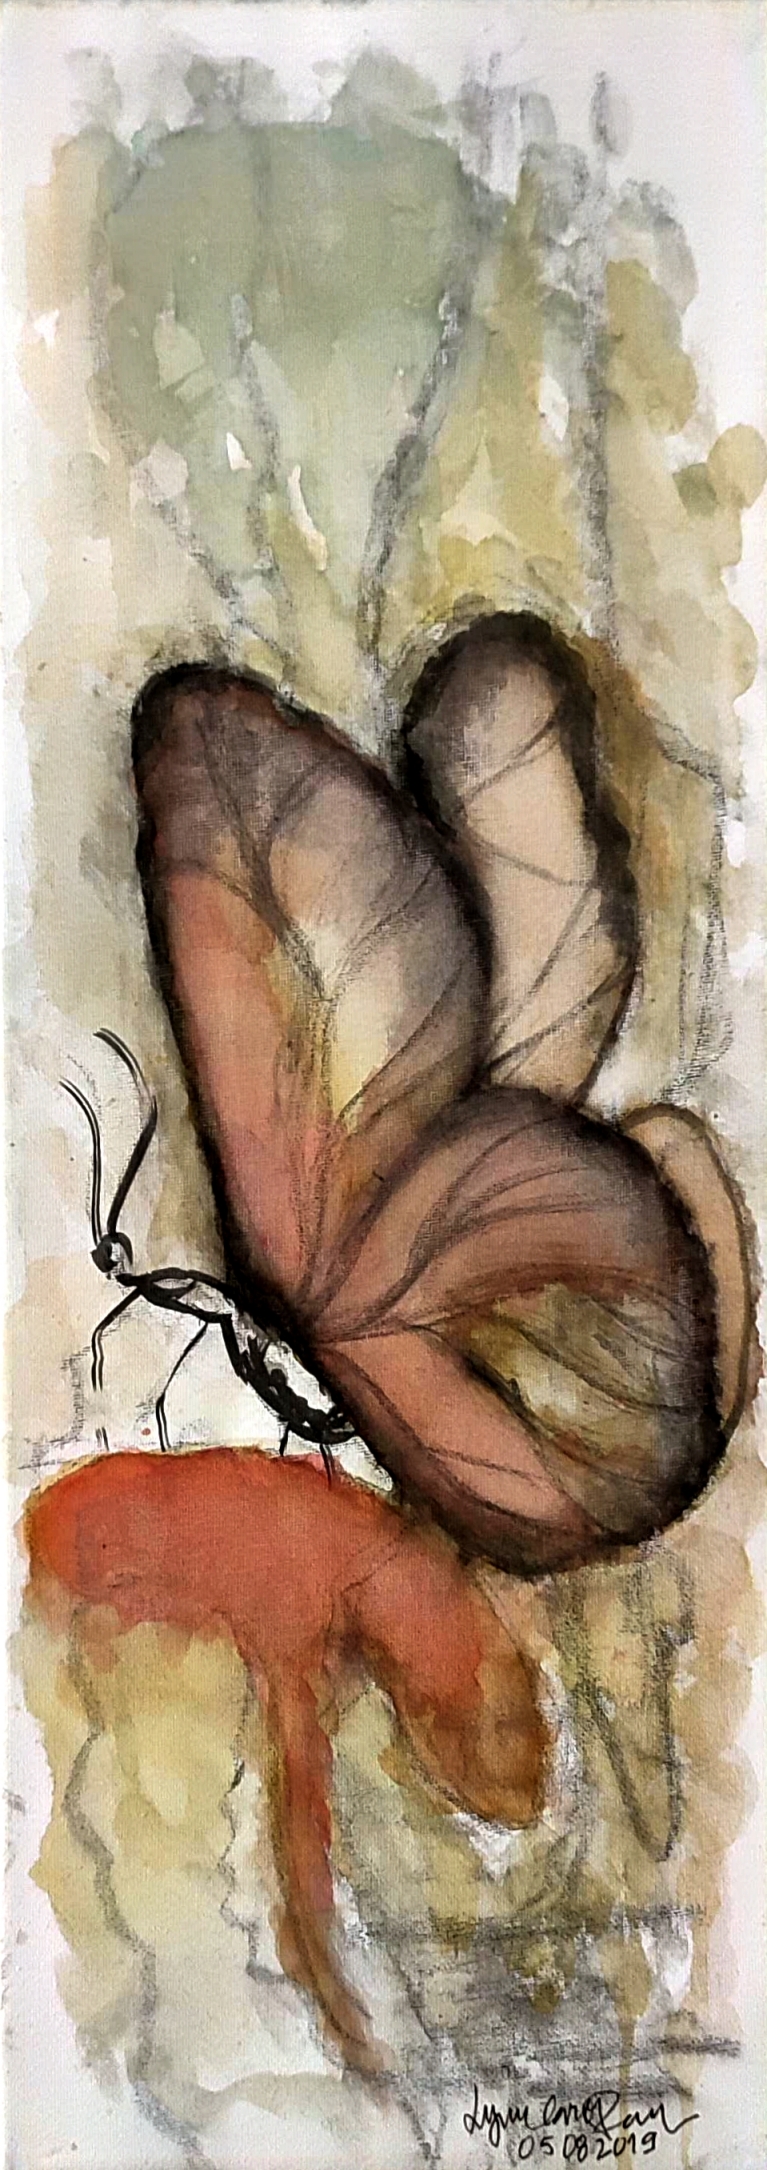 to-pimp-a-butterfly_carolayne-ramos_lynenoyr_galeria-online_loja_artistas-portugueses